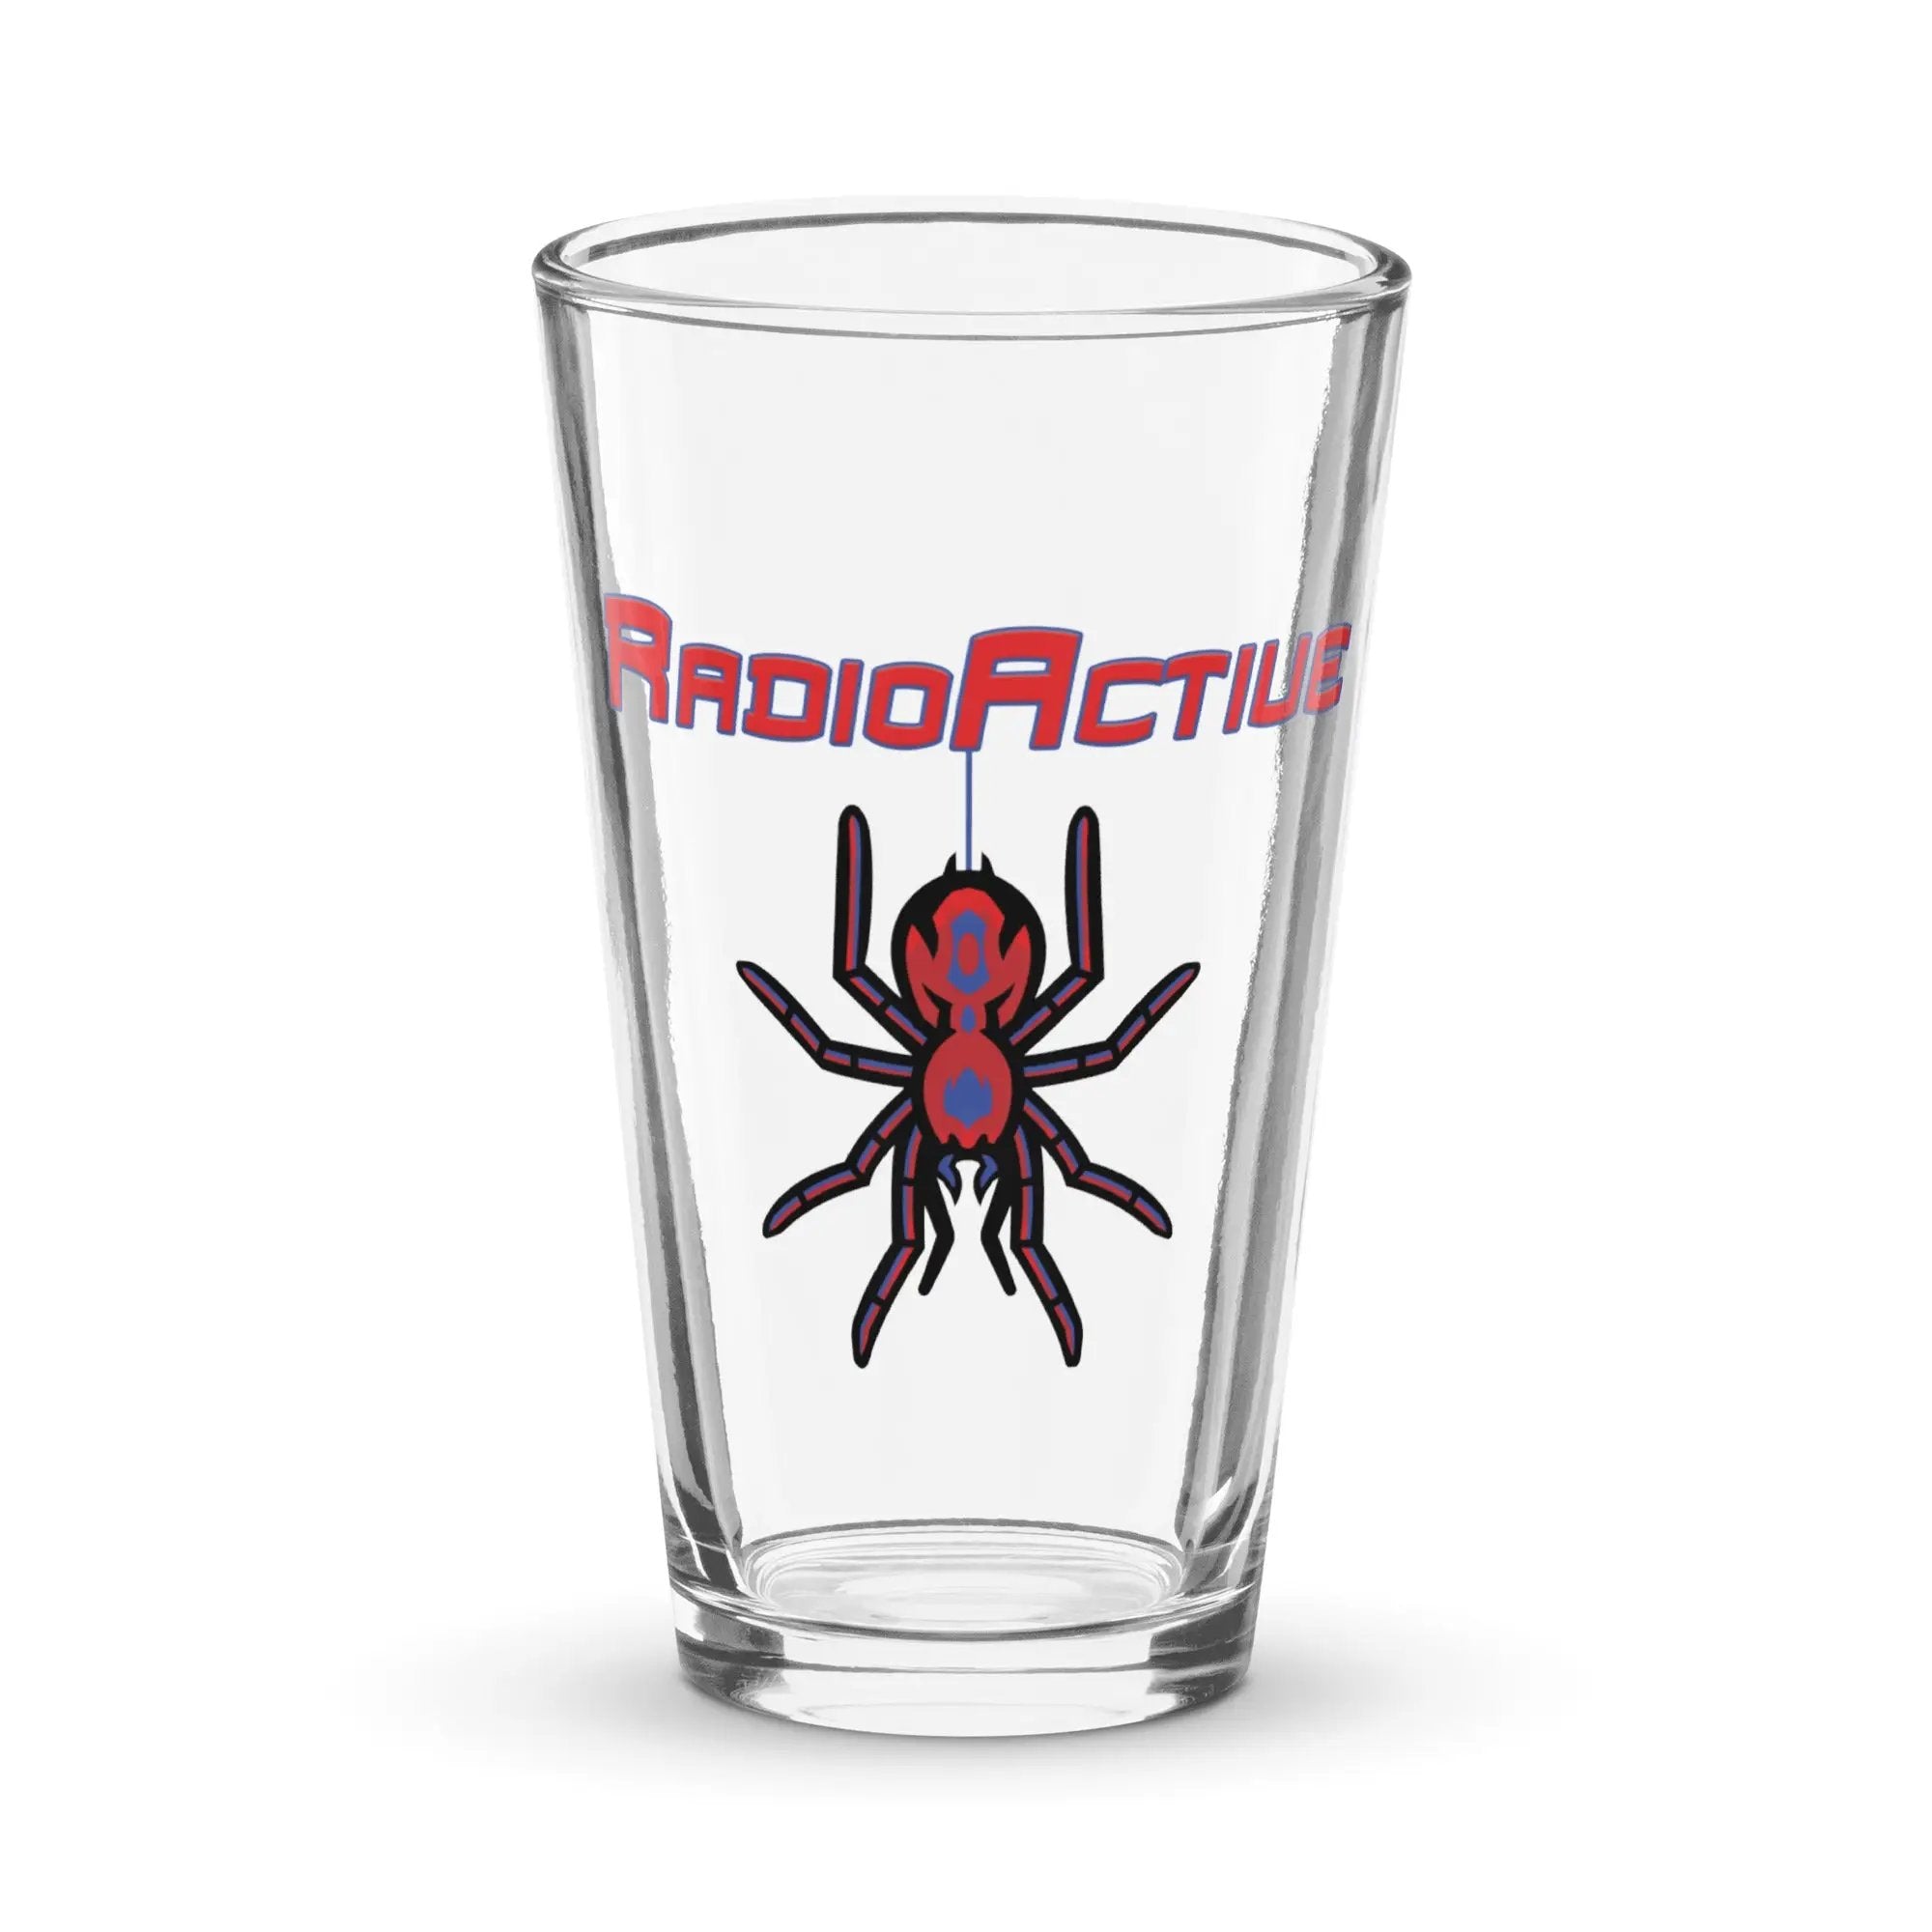 RadioActive! Shaker pint glass